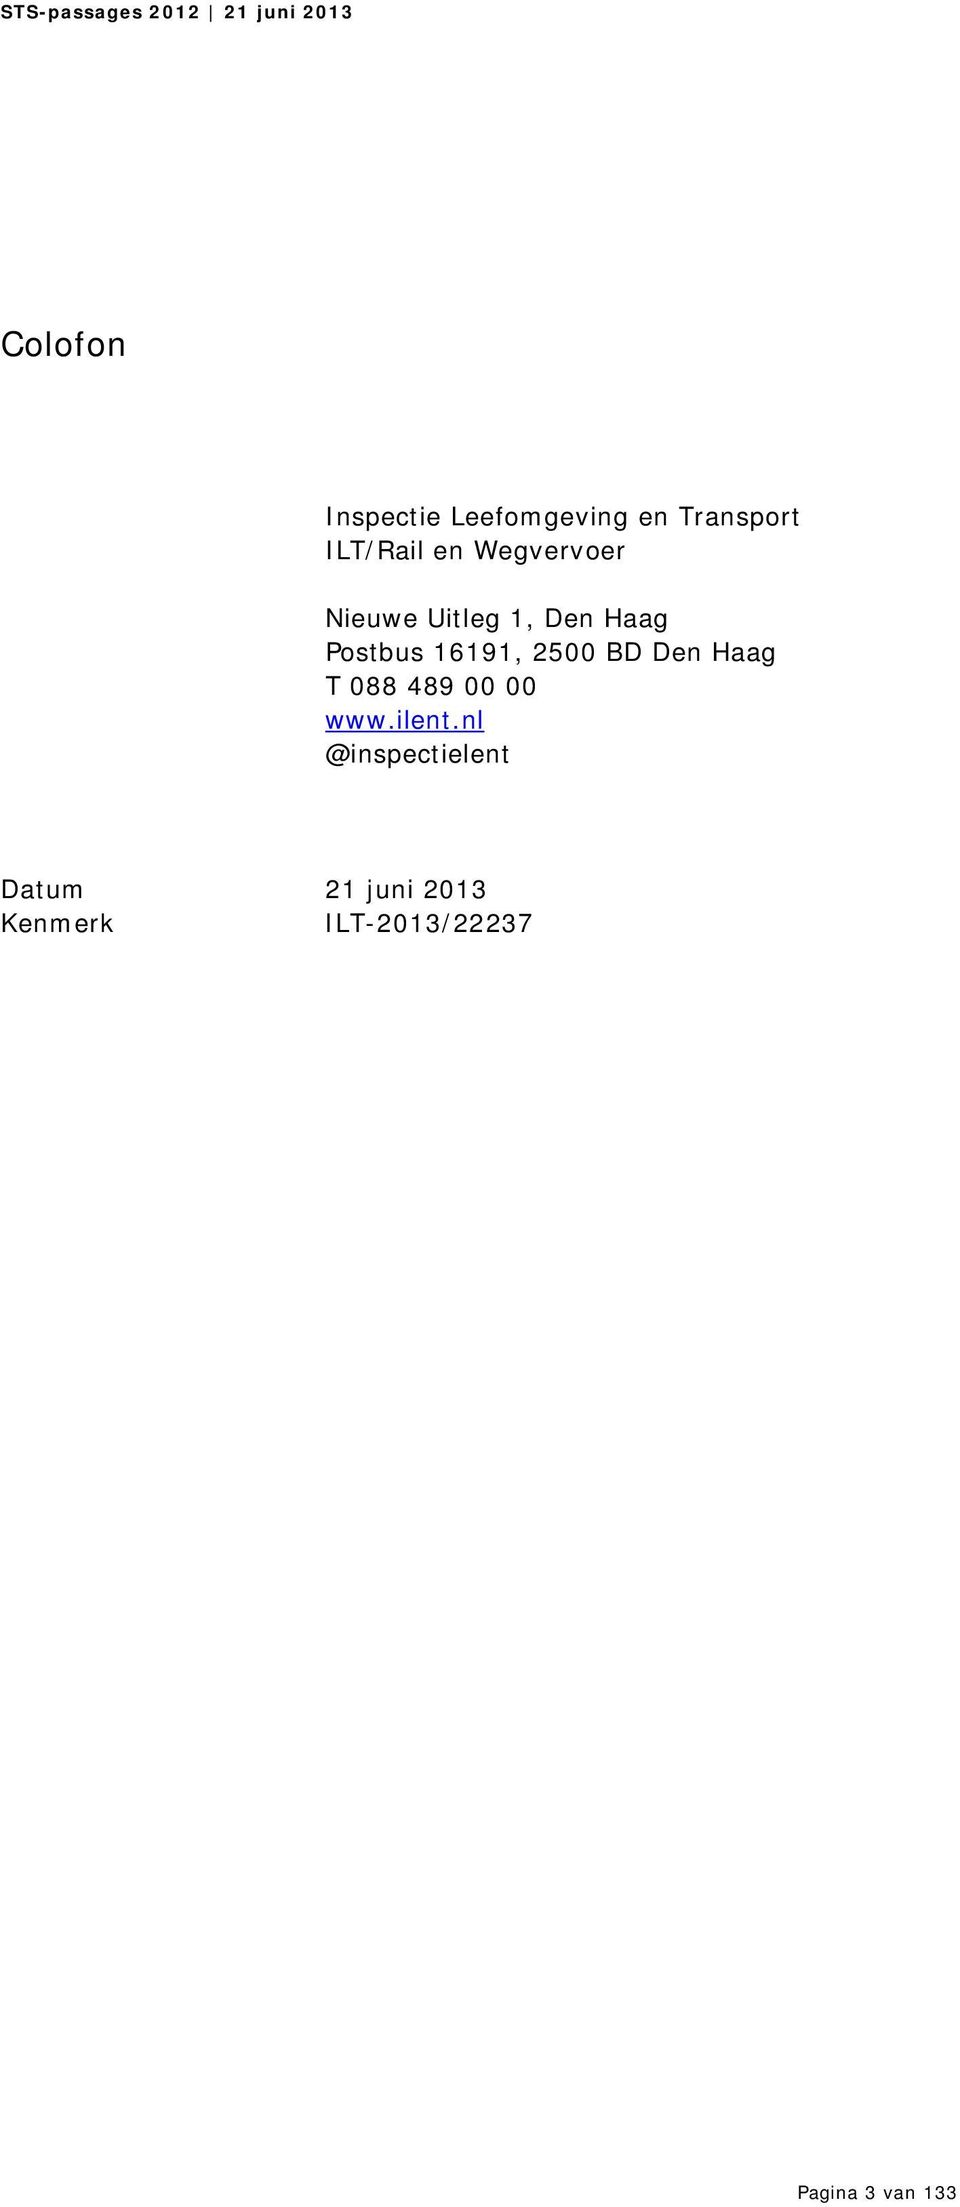 BD Den Haag T 088 489 00 00 www.ilent.